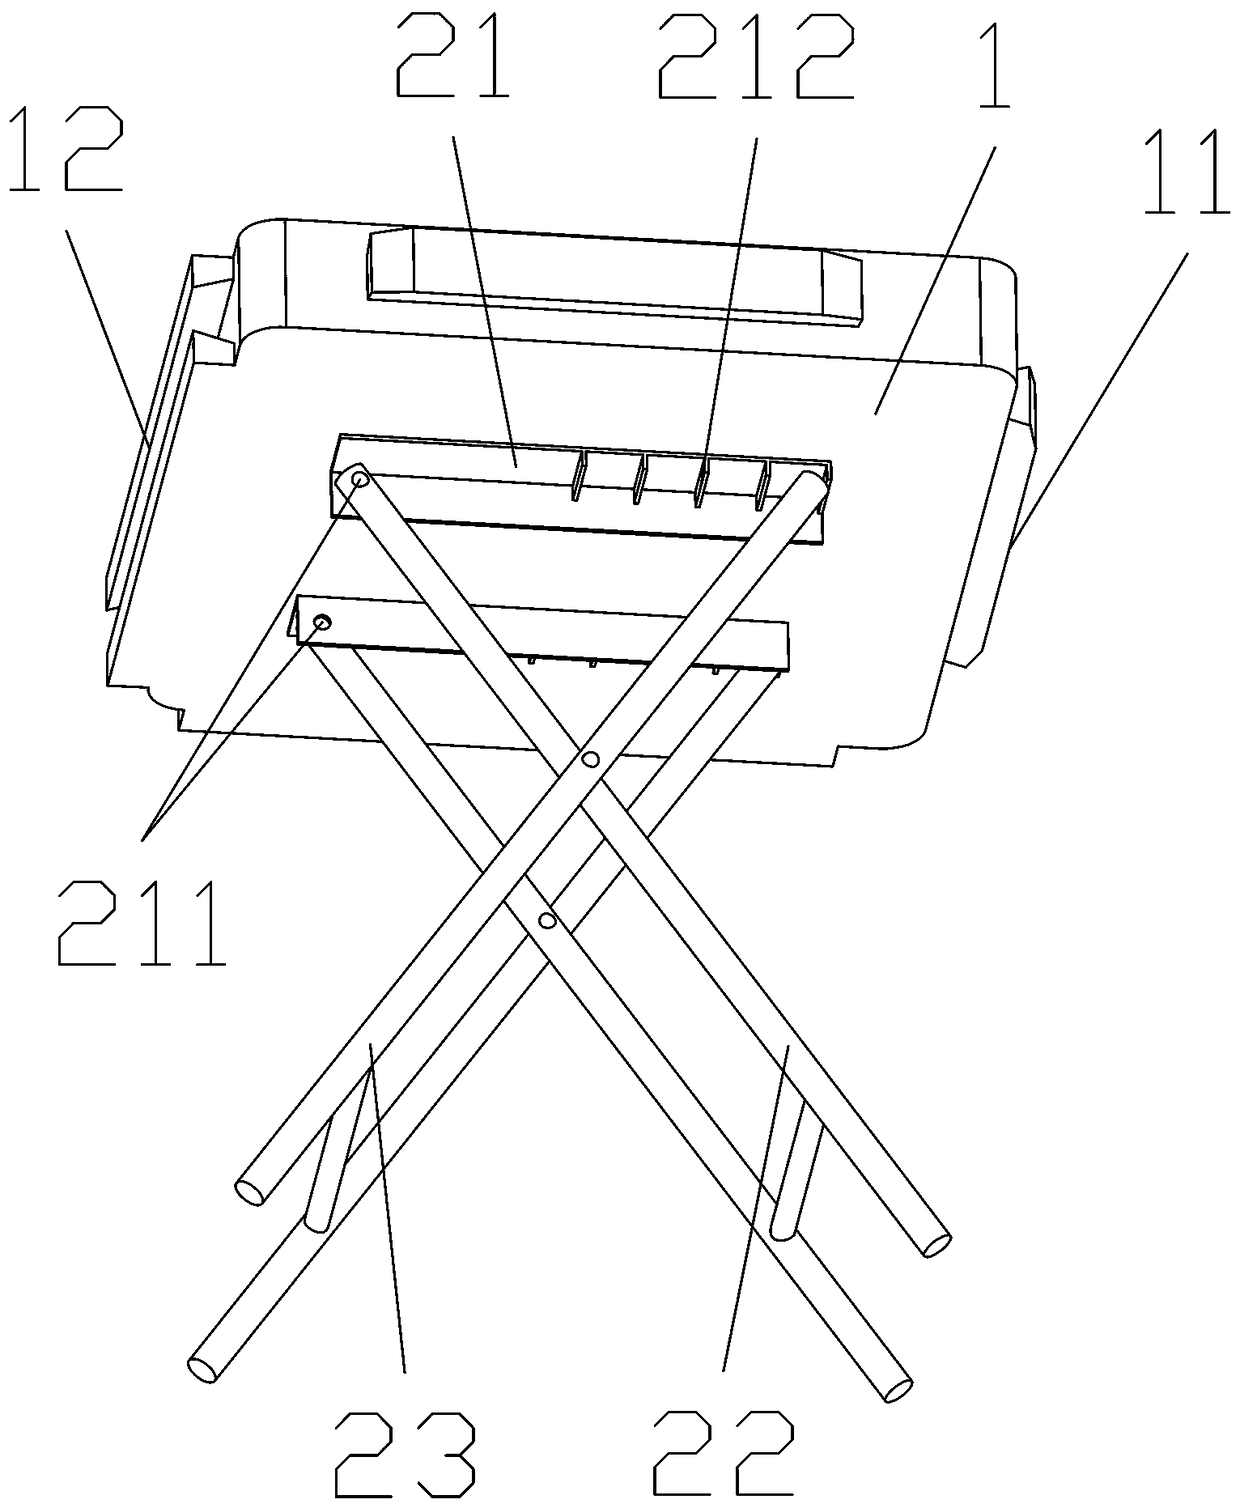 Modular folding stool